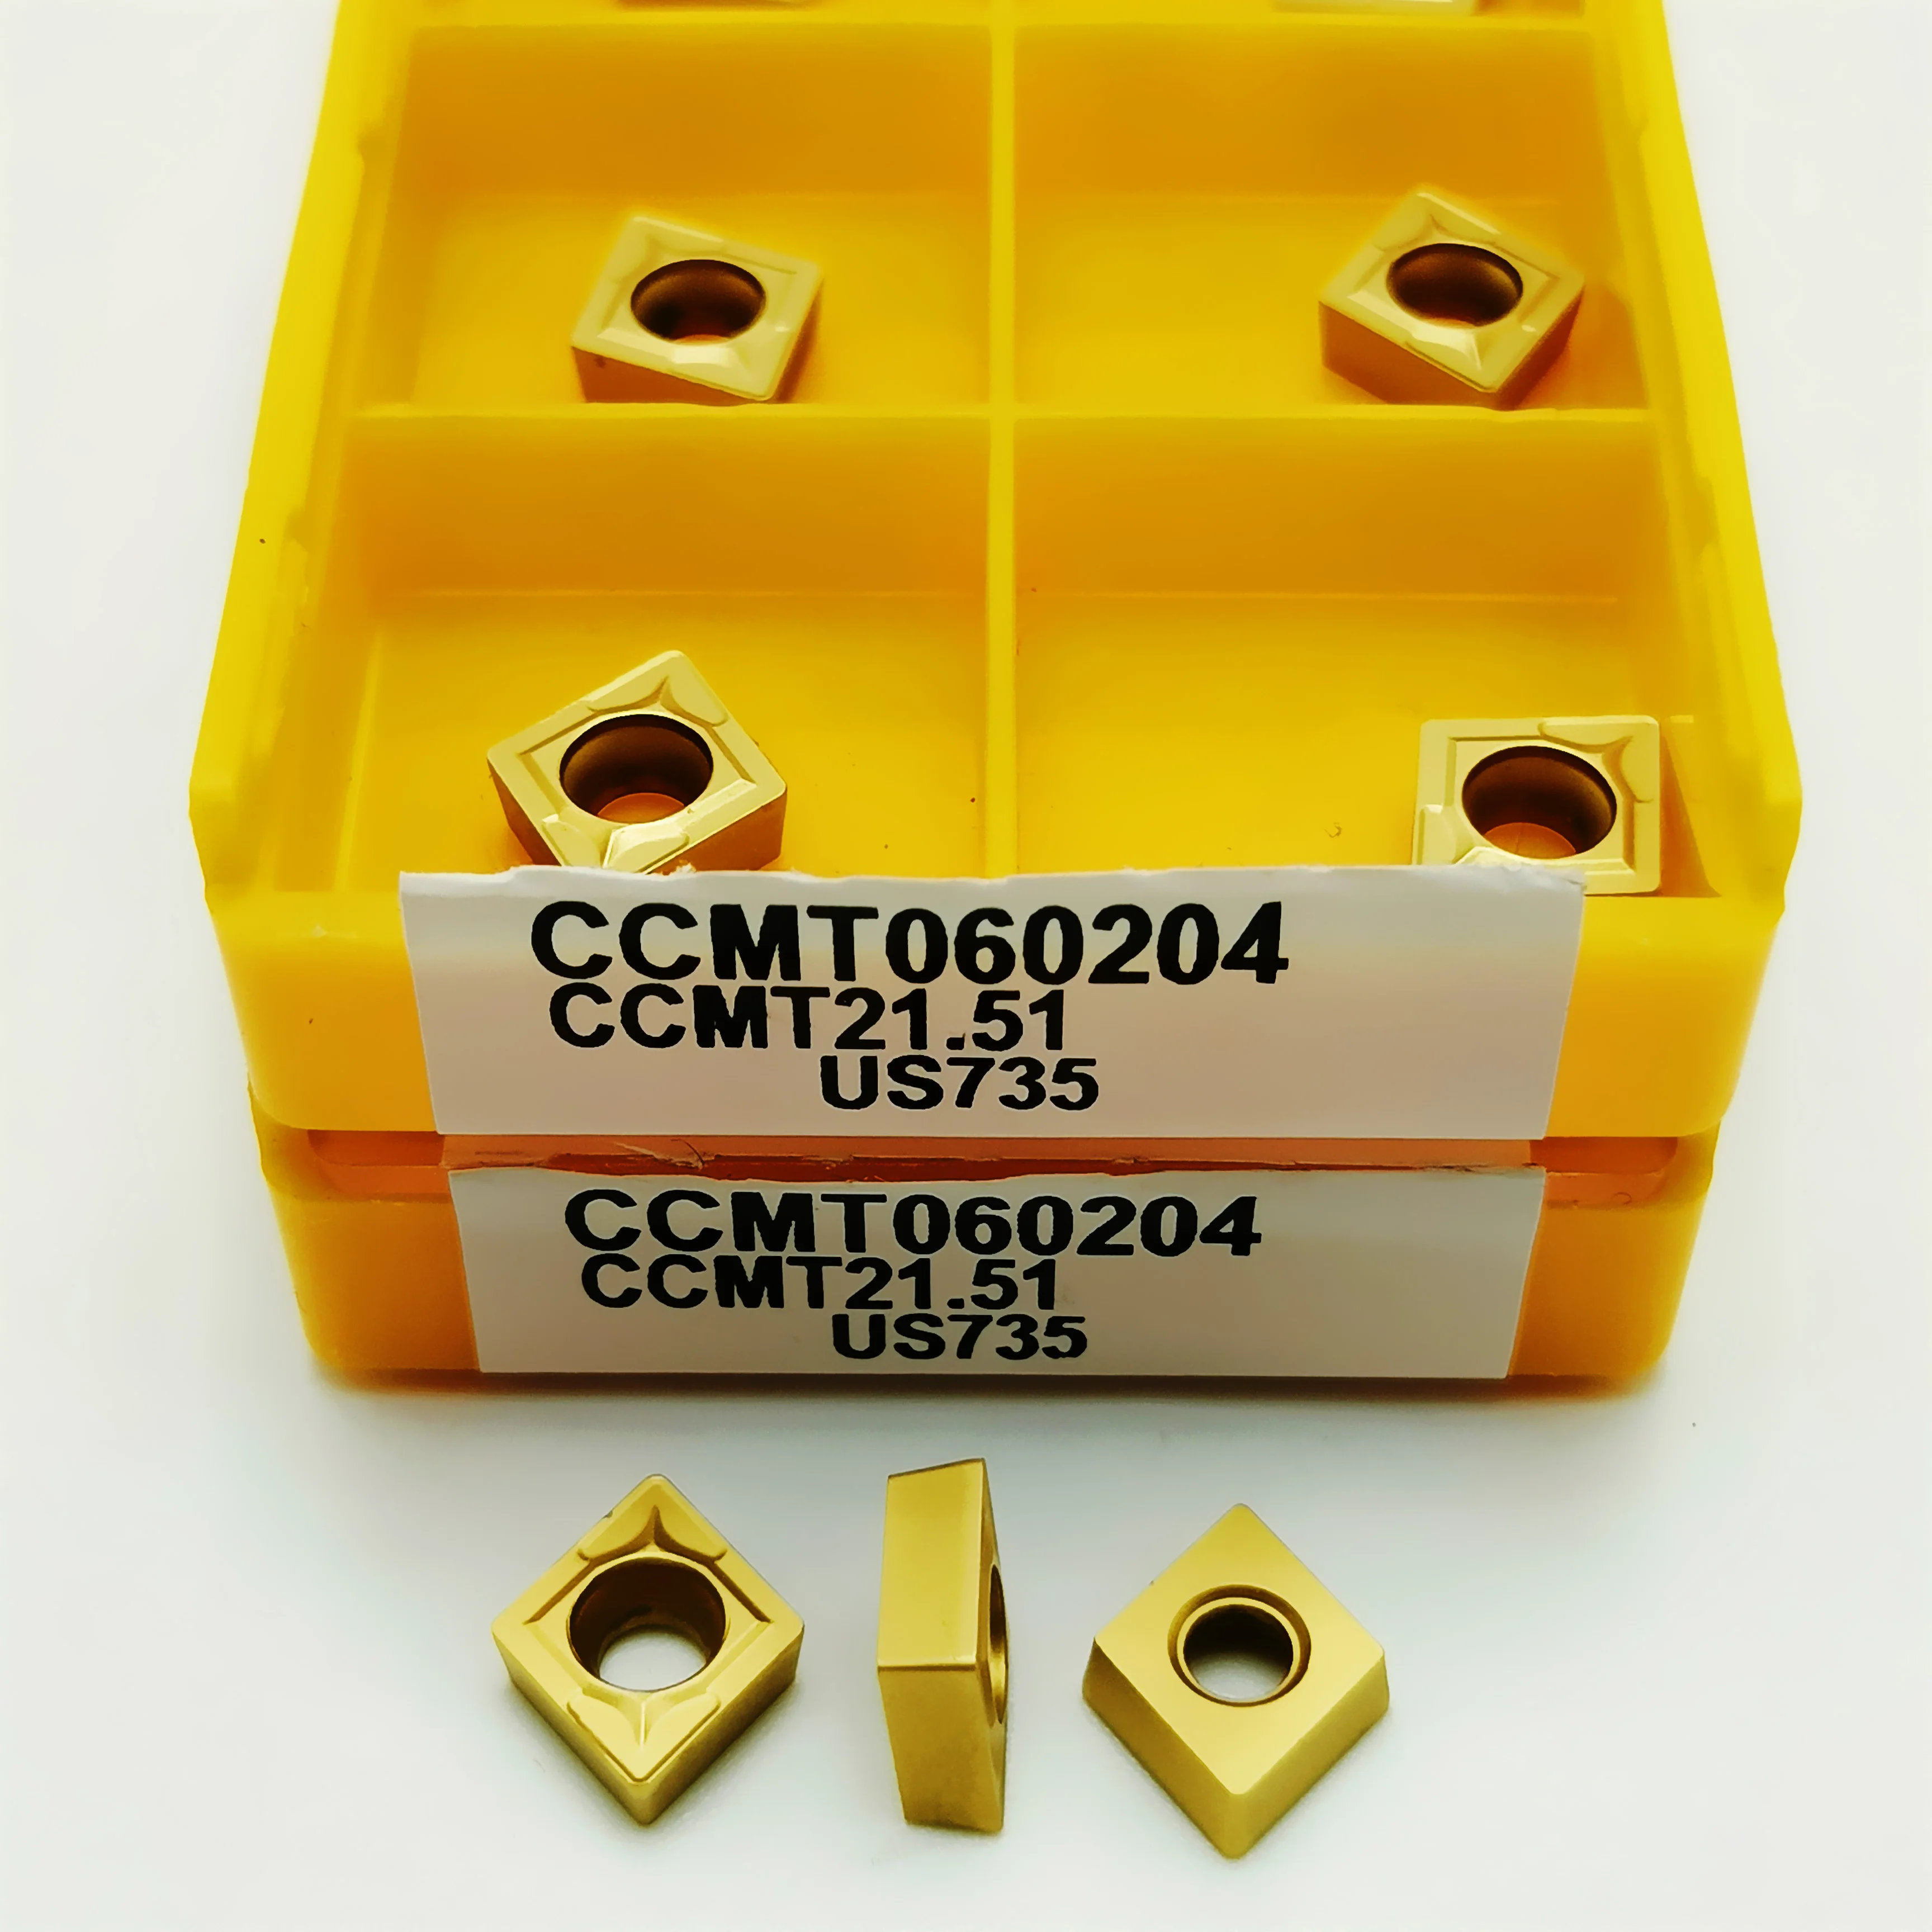 CCMT060204 US735 CNC Internal turning tool carbide turning tool milling tool lathe tool CCMT